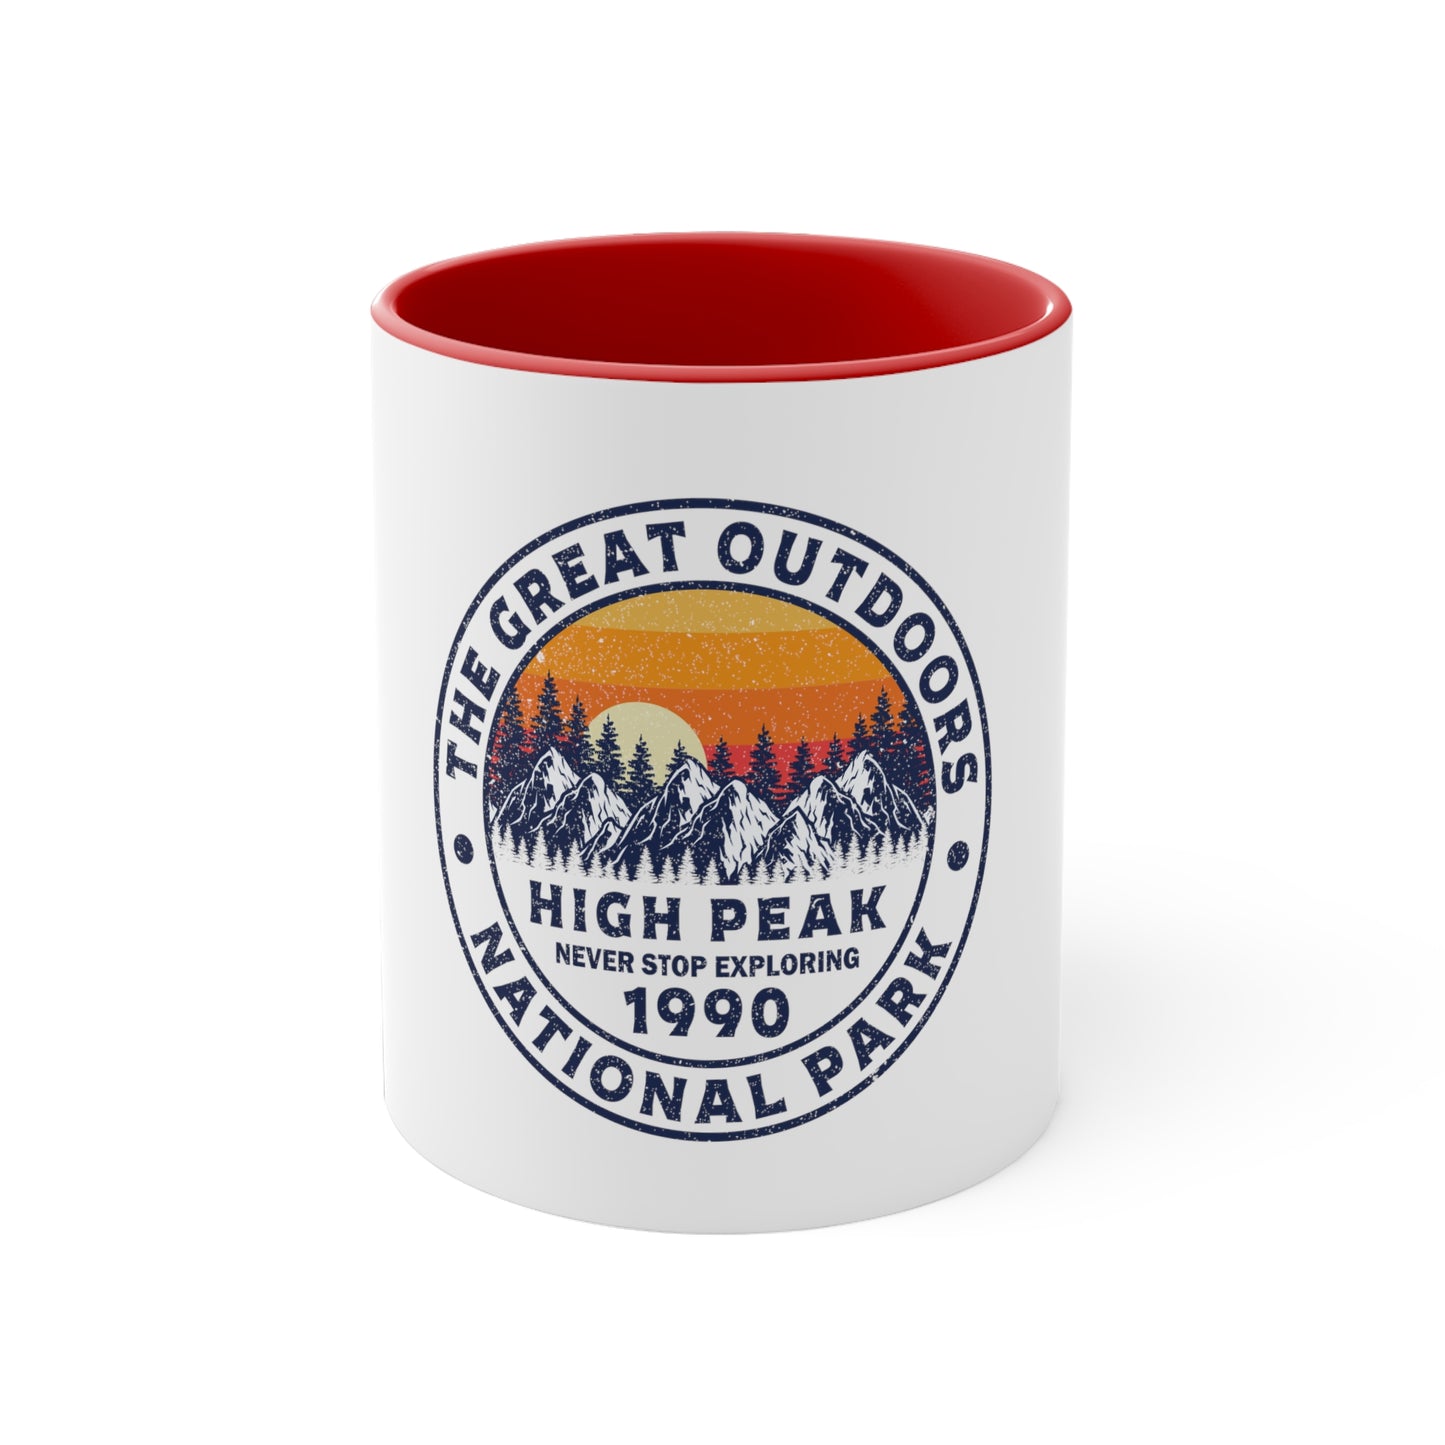 Never Stop Exploring. High Peak National Park. Accent Coffee Mug, 11oz